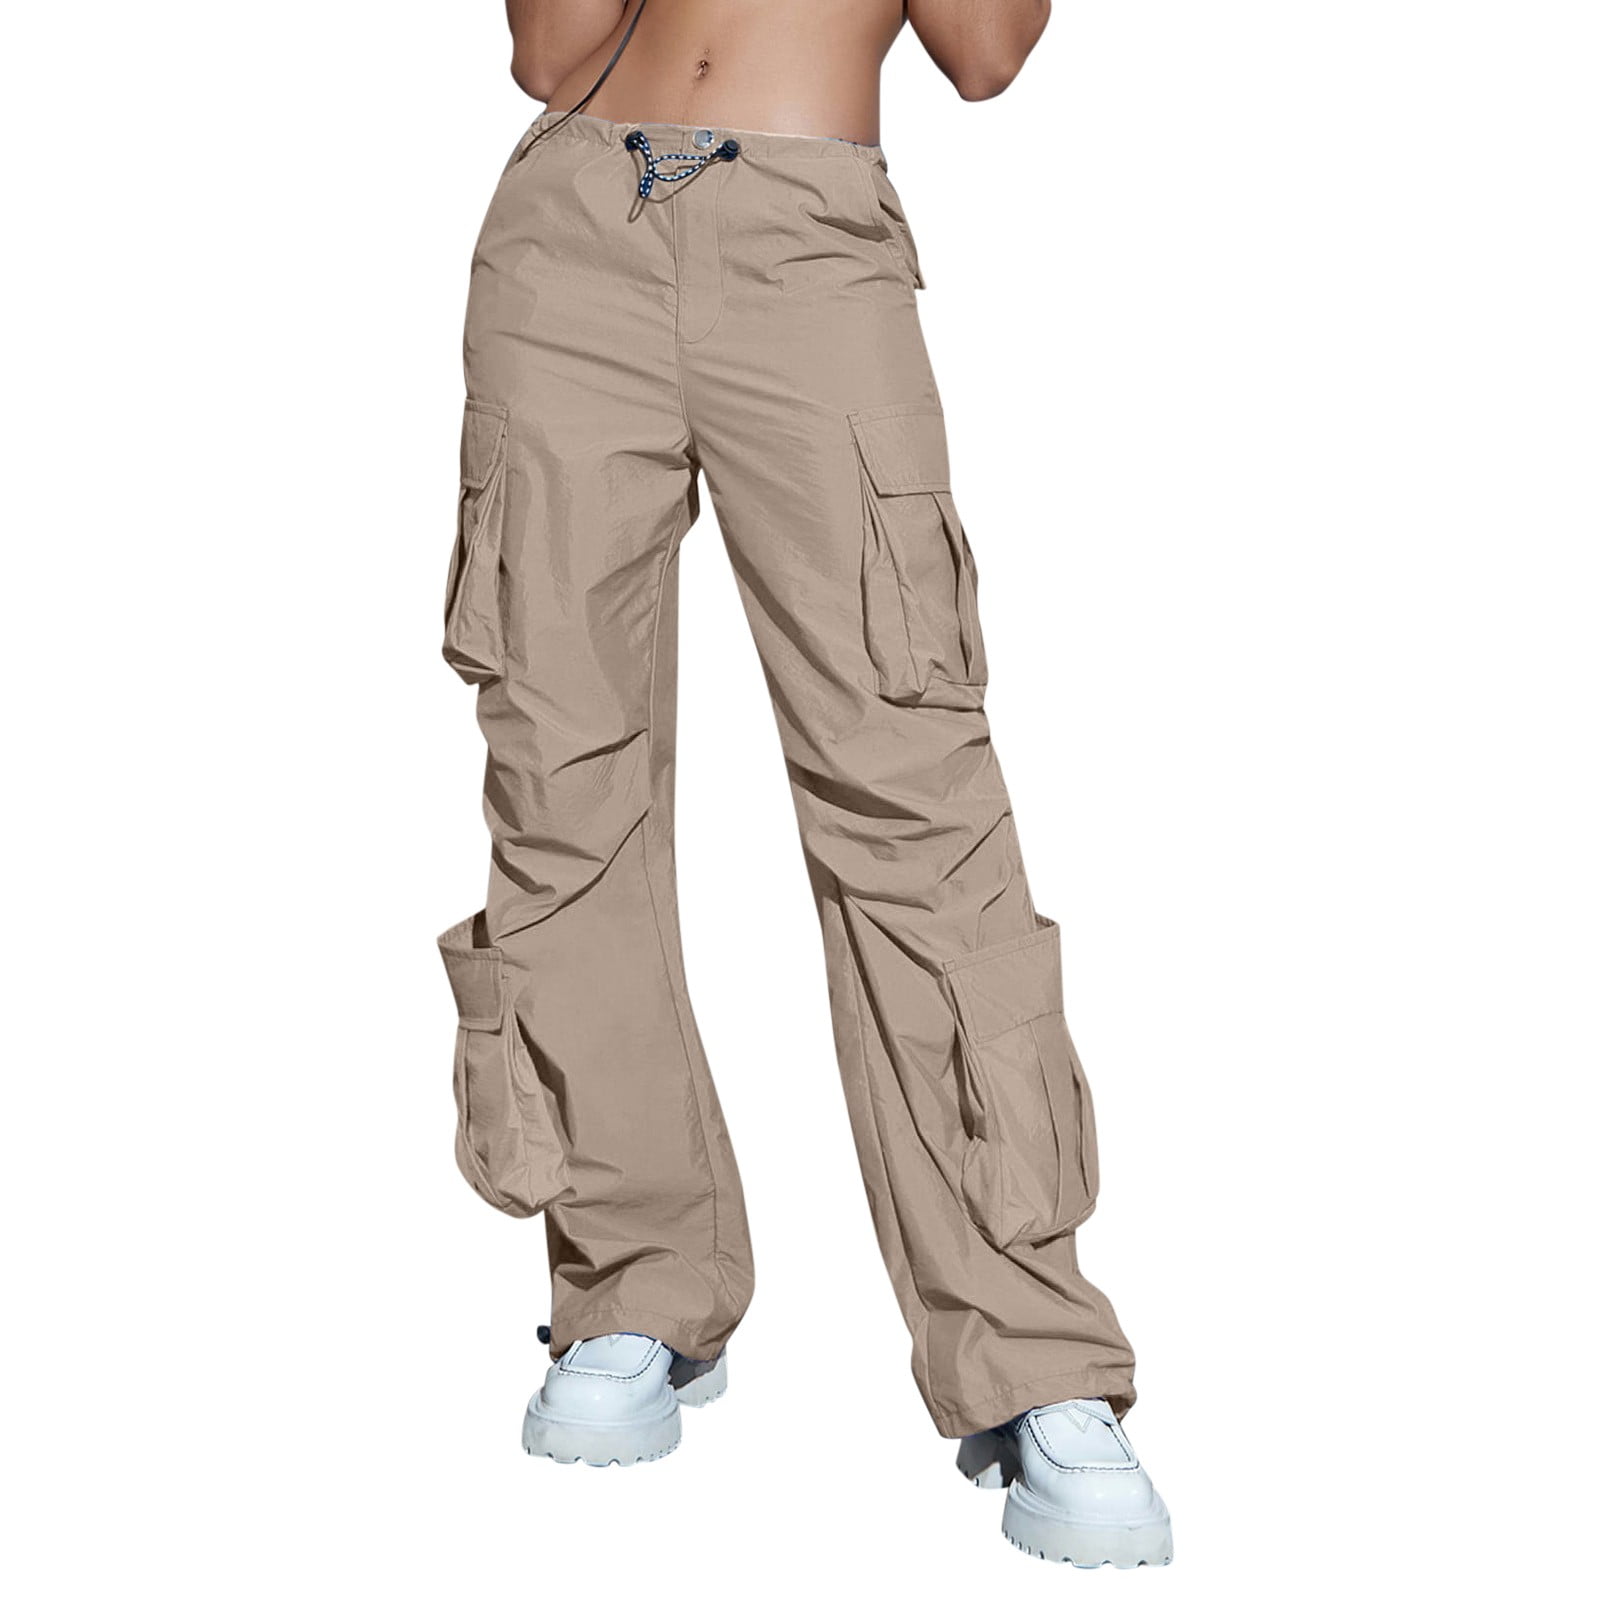 2023 Spring coordination - cargo pants outfits - no.1 sweat shirt × desert  camo BDU pants no.2 stripe shirt × double face cargo…